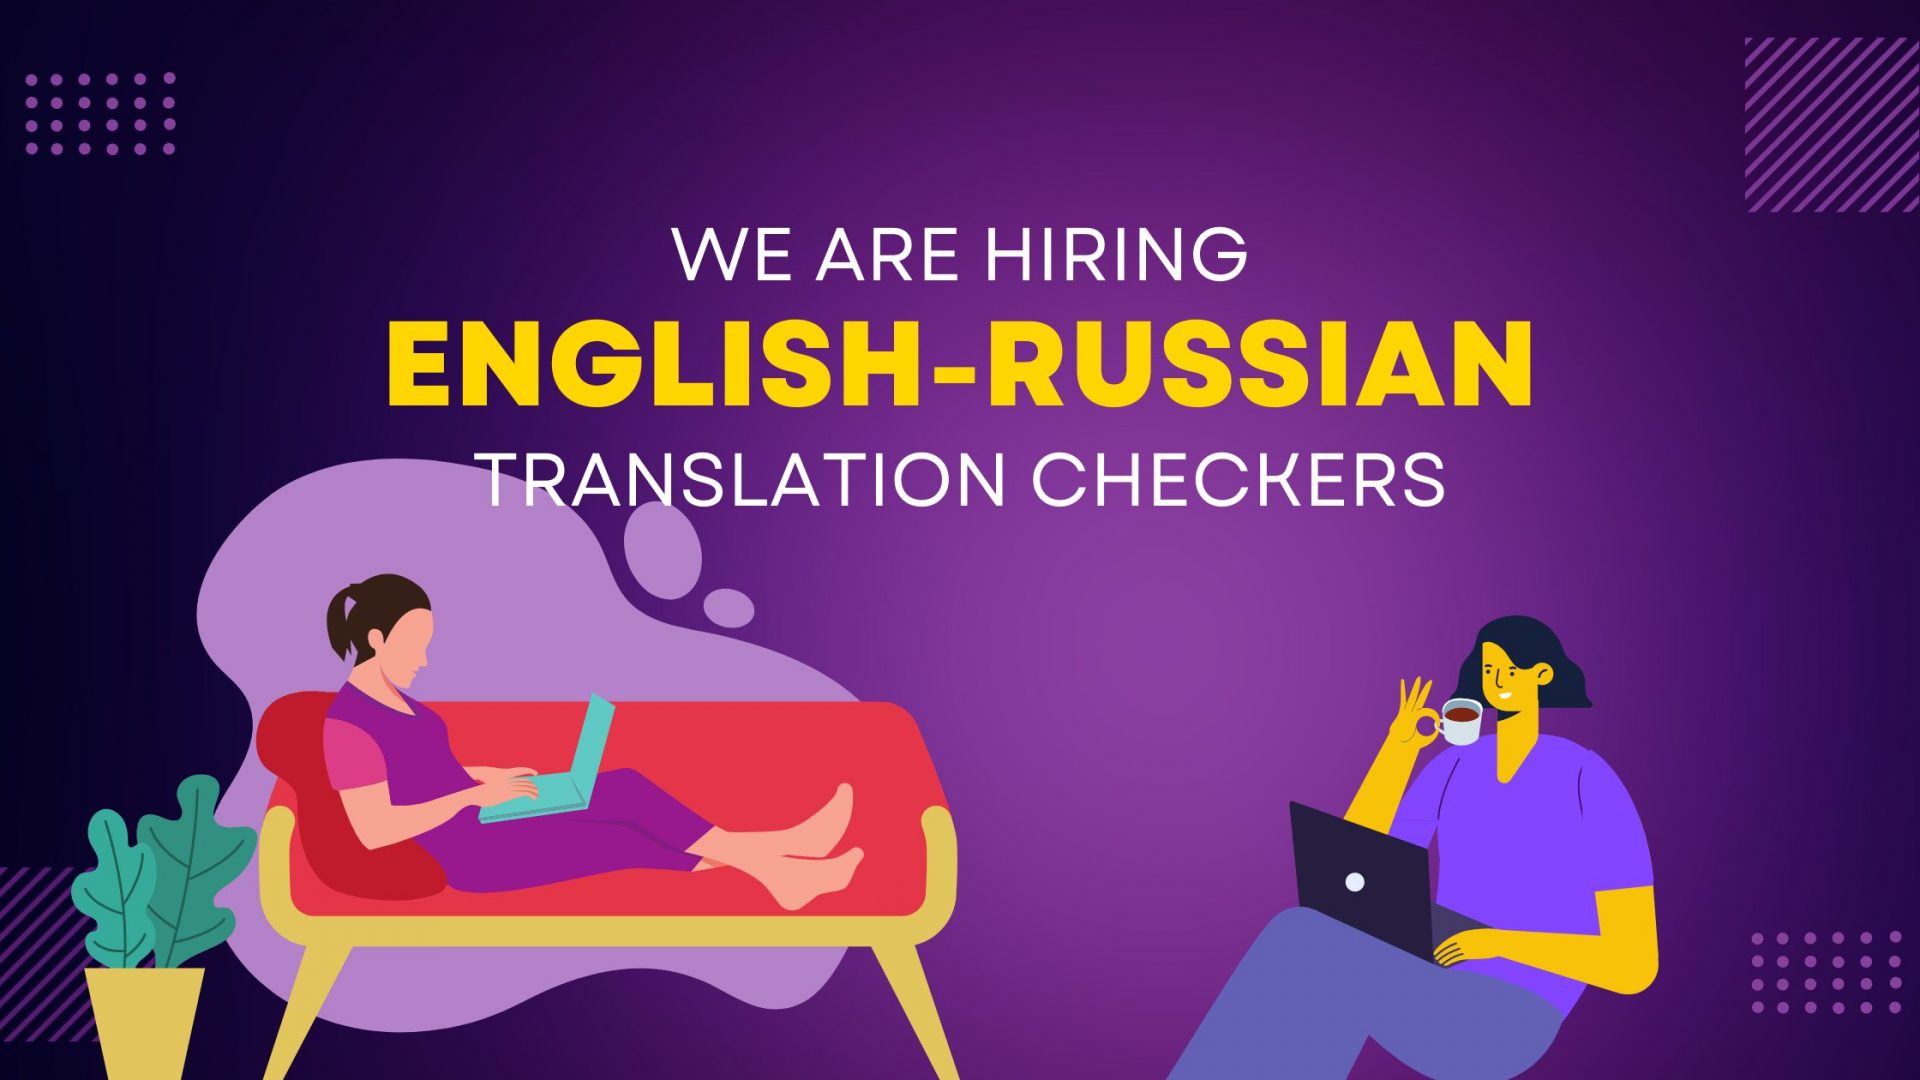 HIRING! English-Russian Translation Checkers